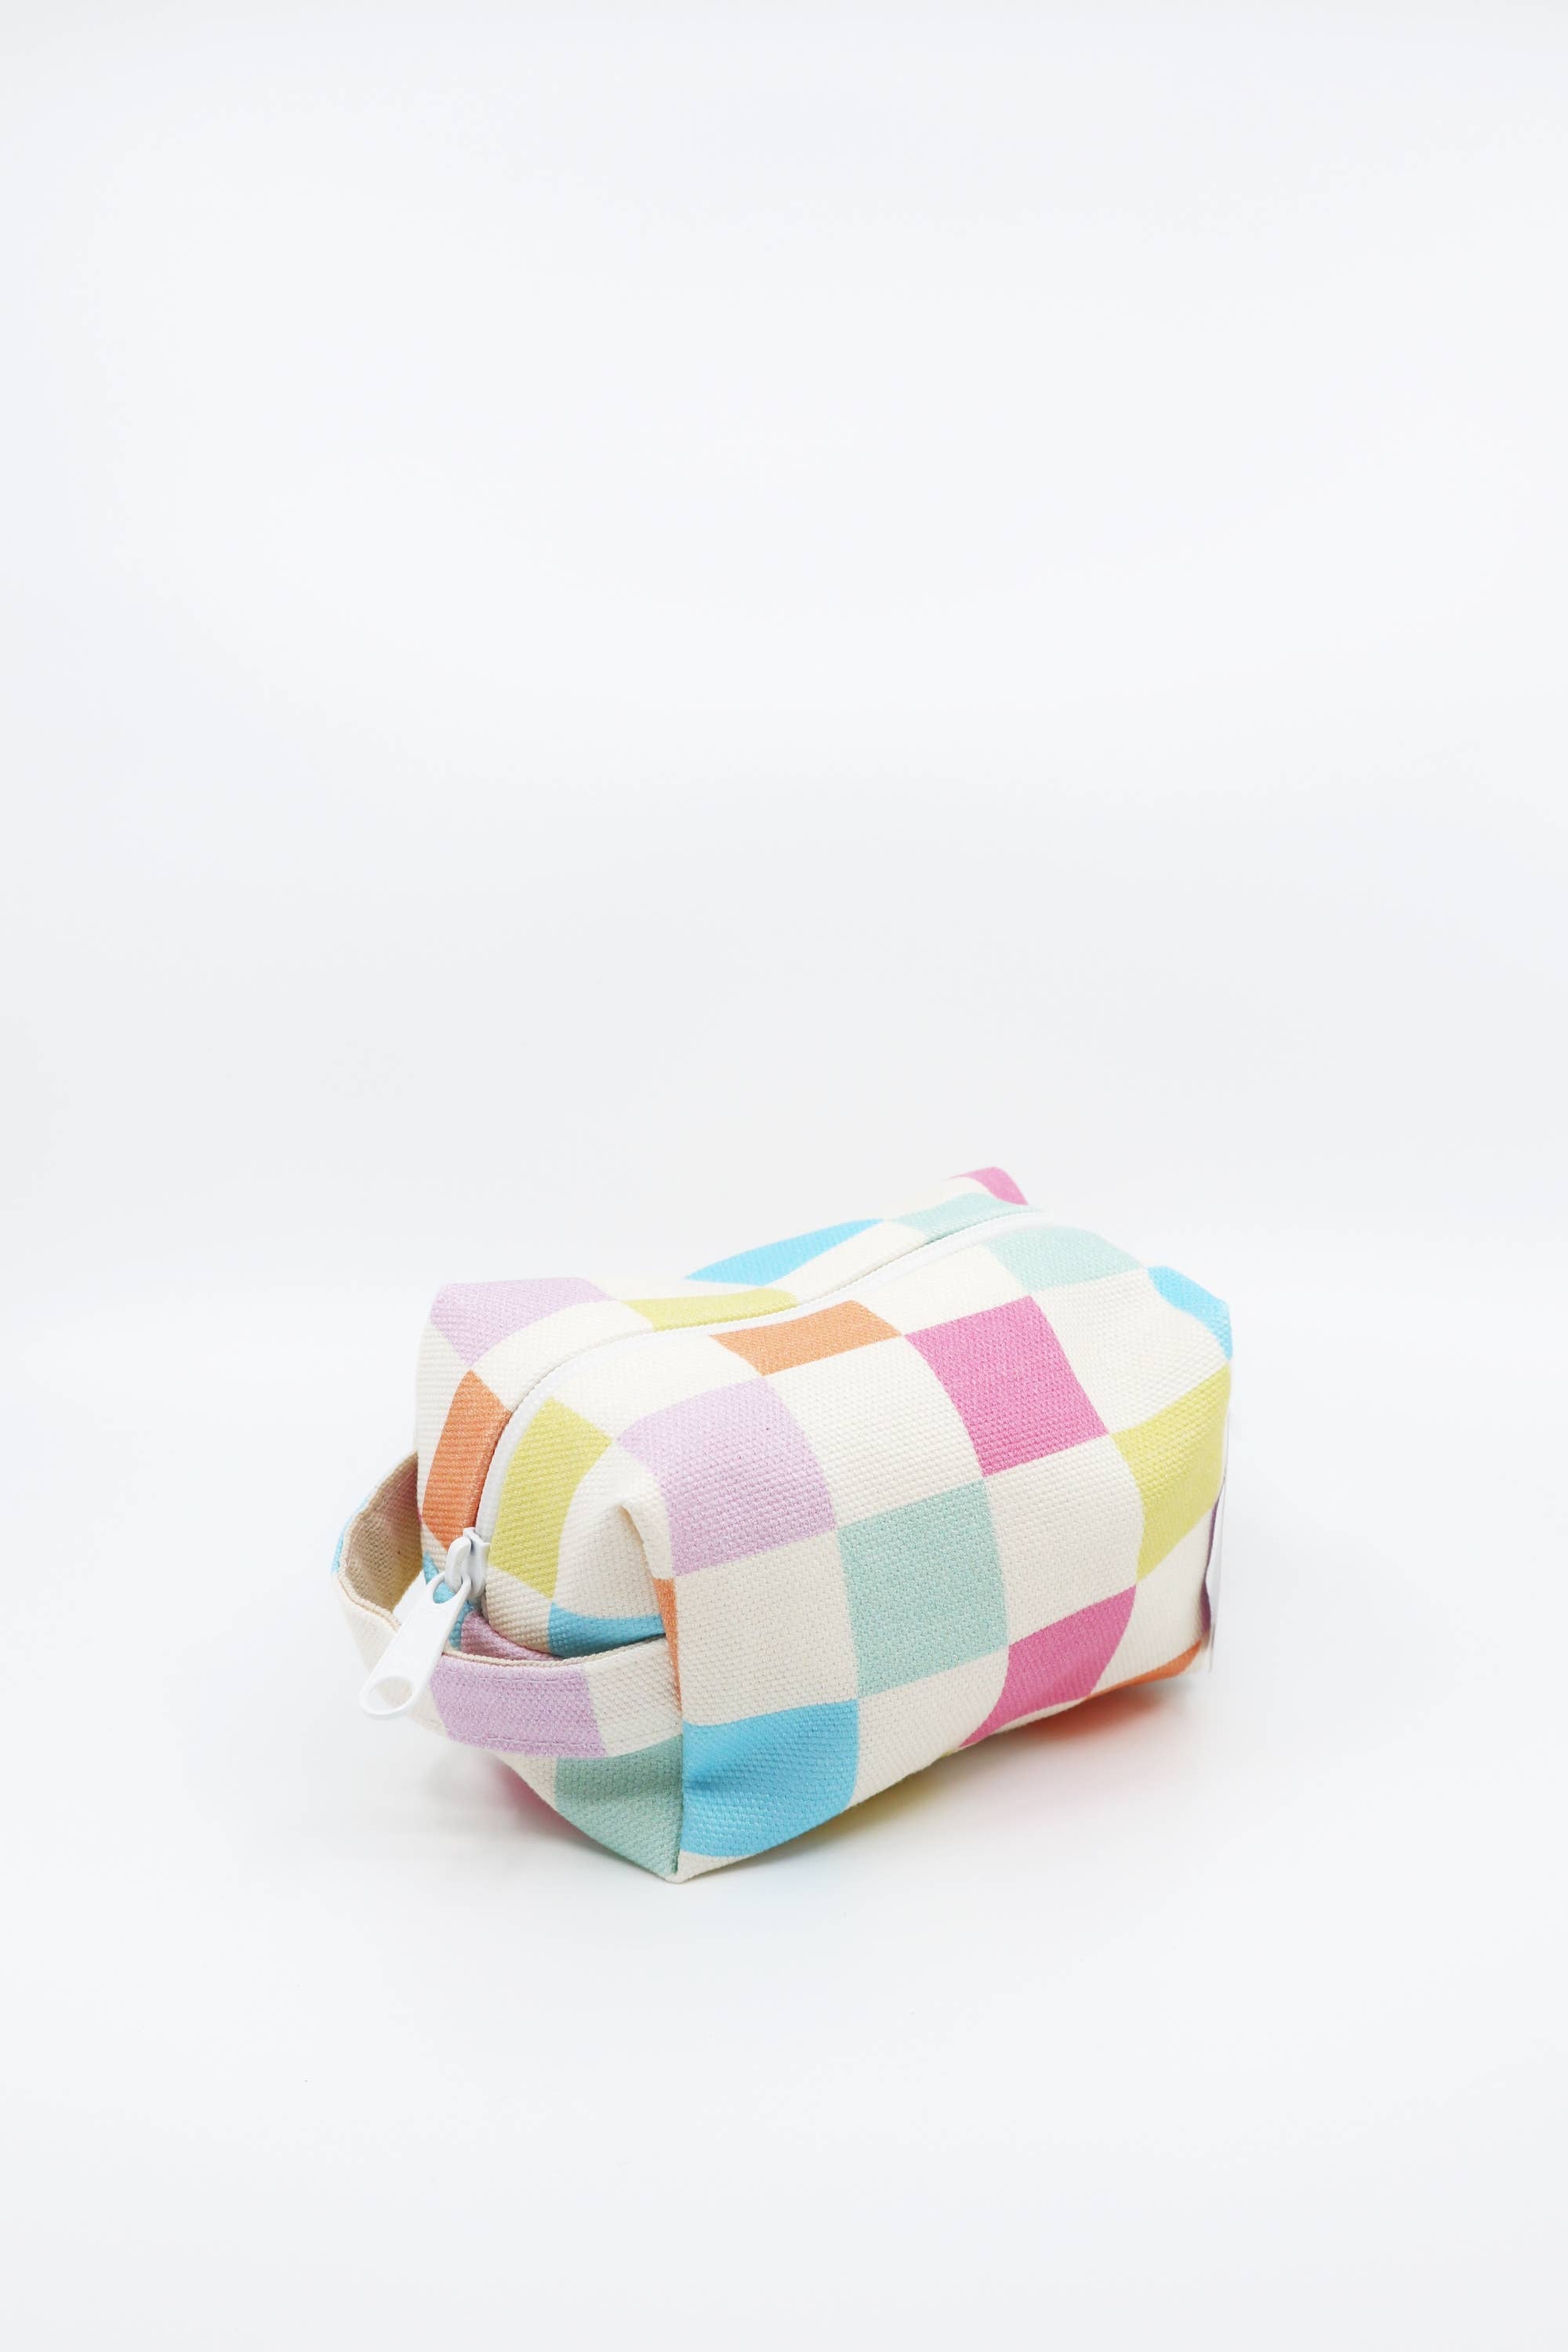 Freon Collective - Mini Makeup Bag - Pastel Grid